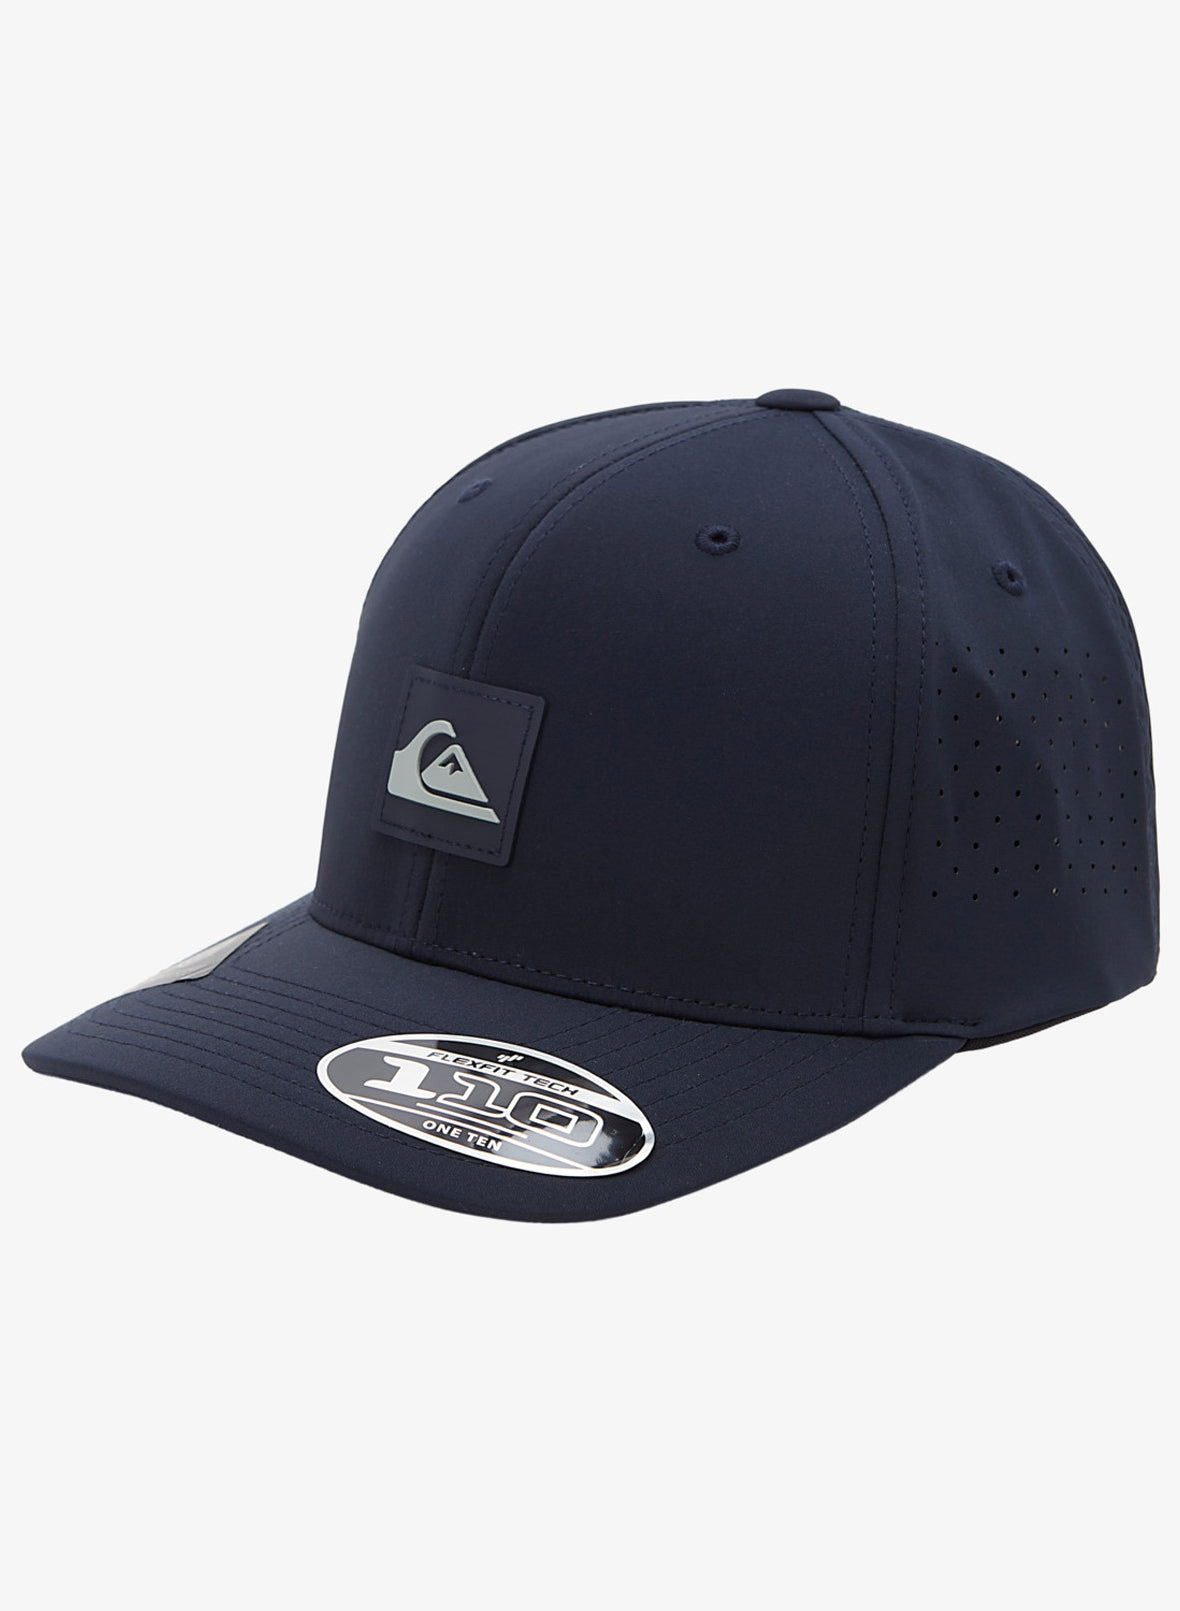 Quiksilver: Adapted Flexfit Hat